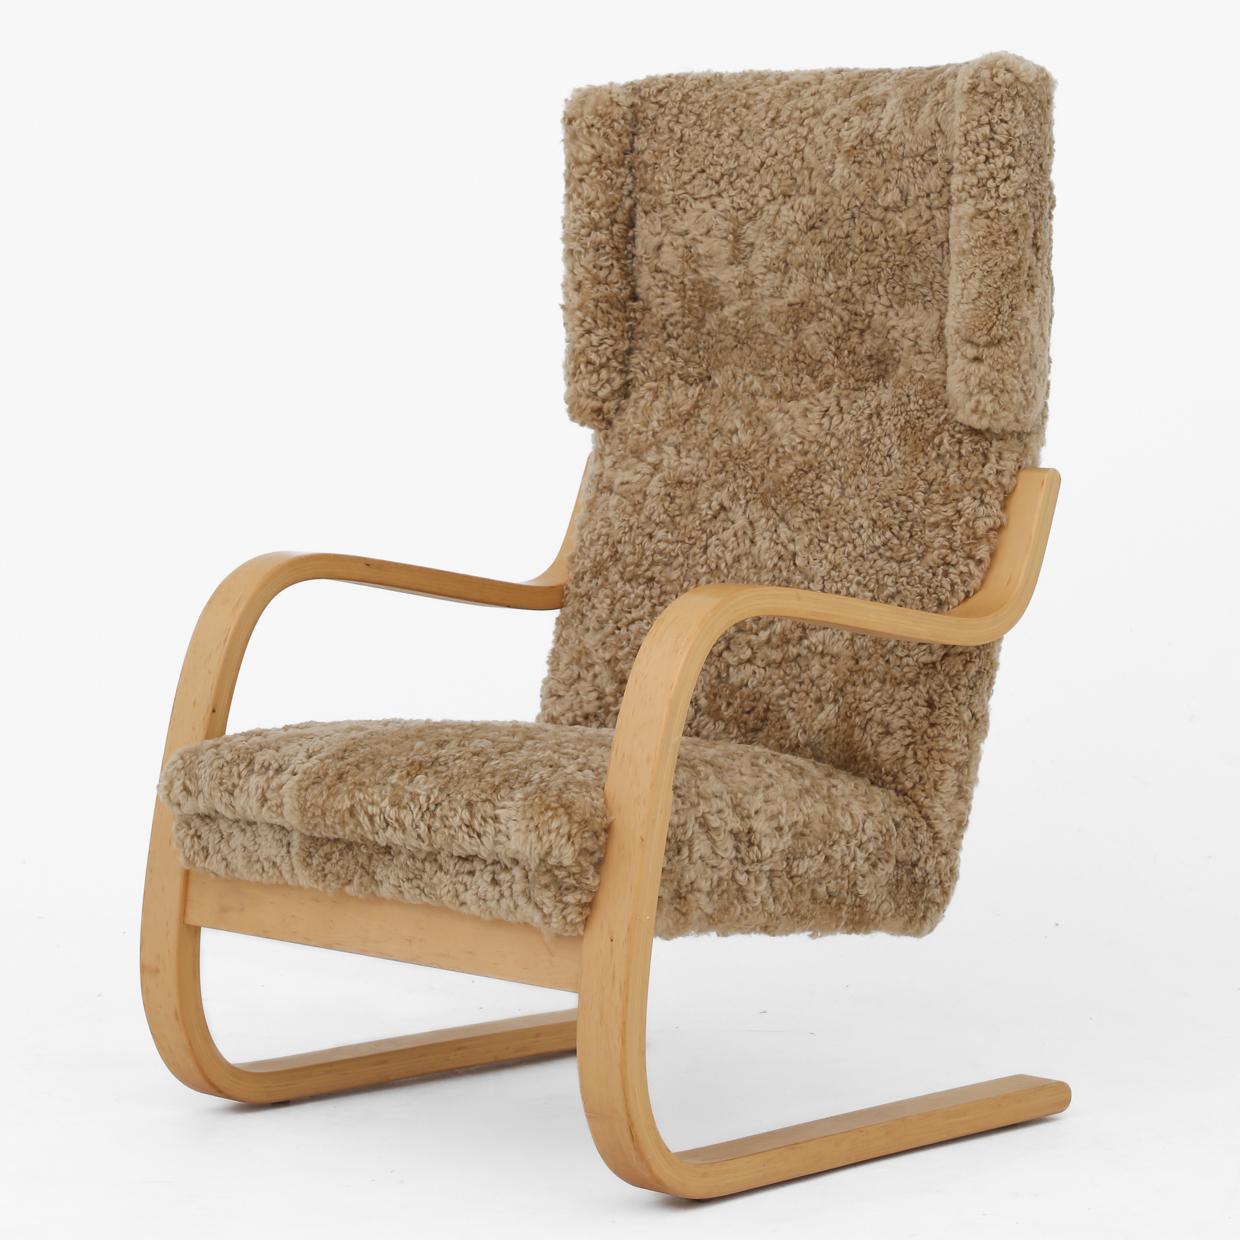 Set of two Model 401 - easy chairs in birch wood, reupholstered in 'Honey' lambskin. Alvar Aalto / Artek.